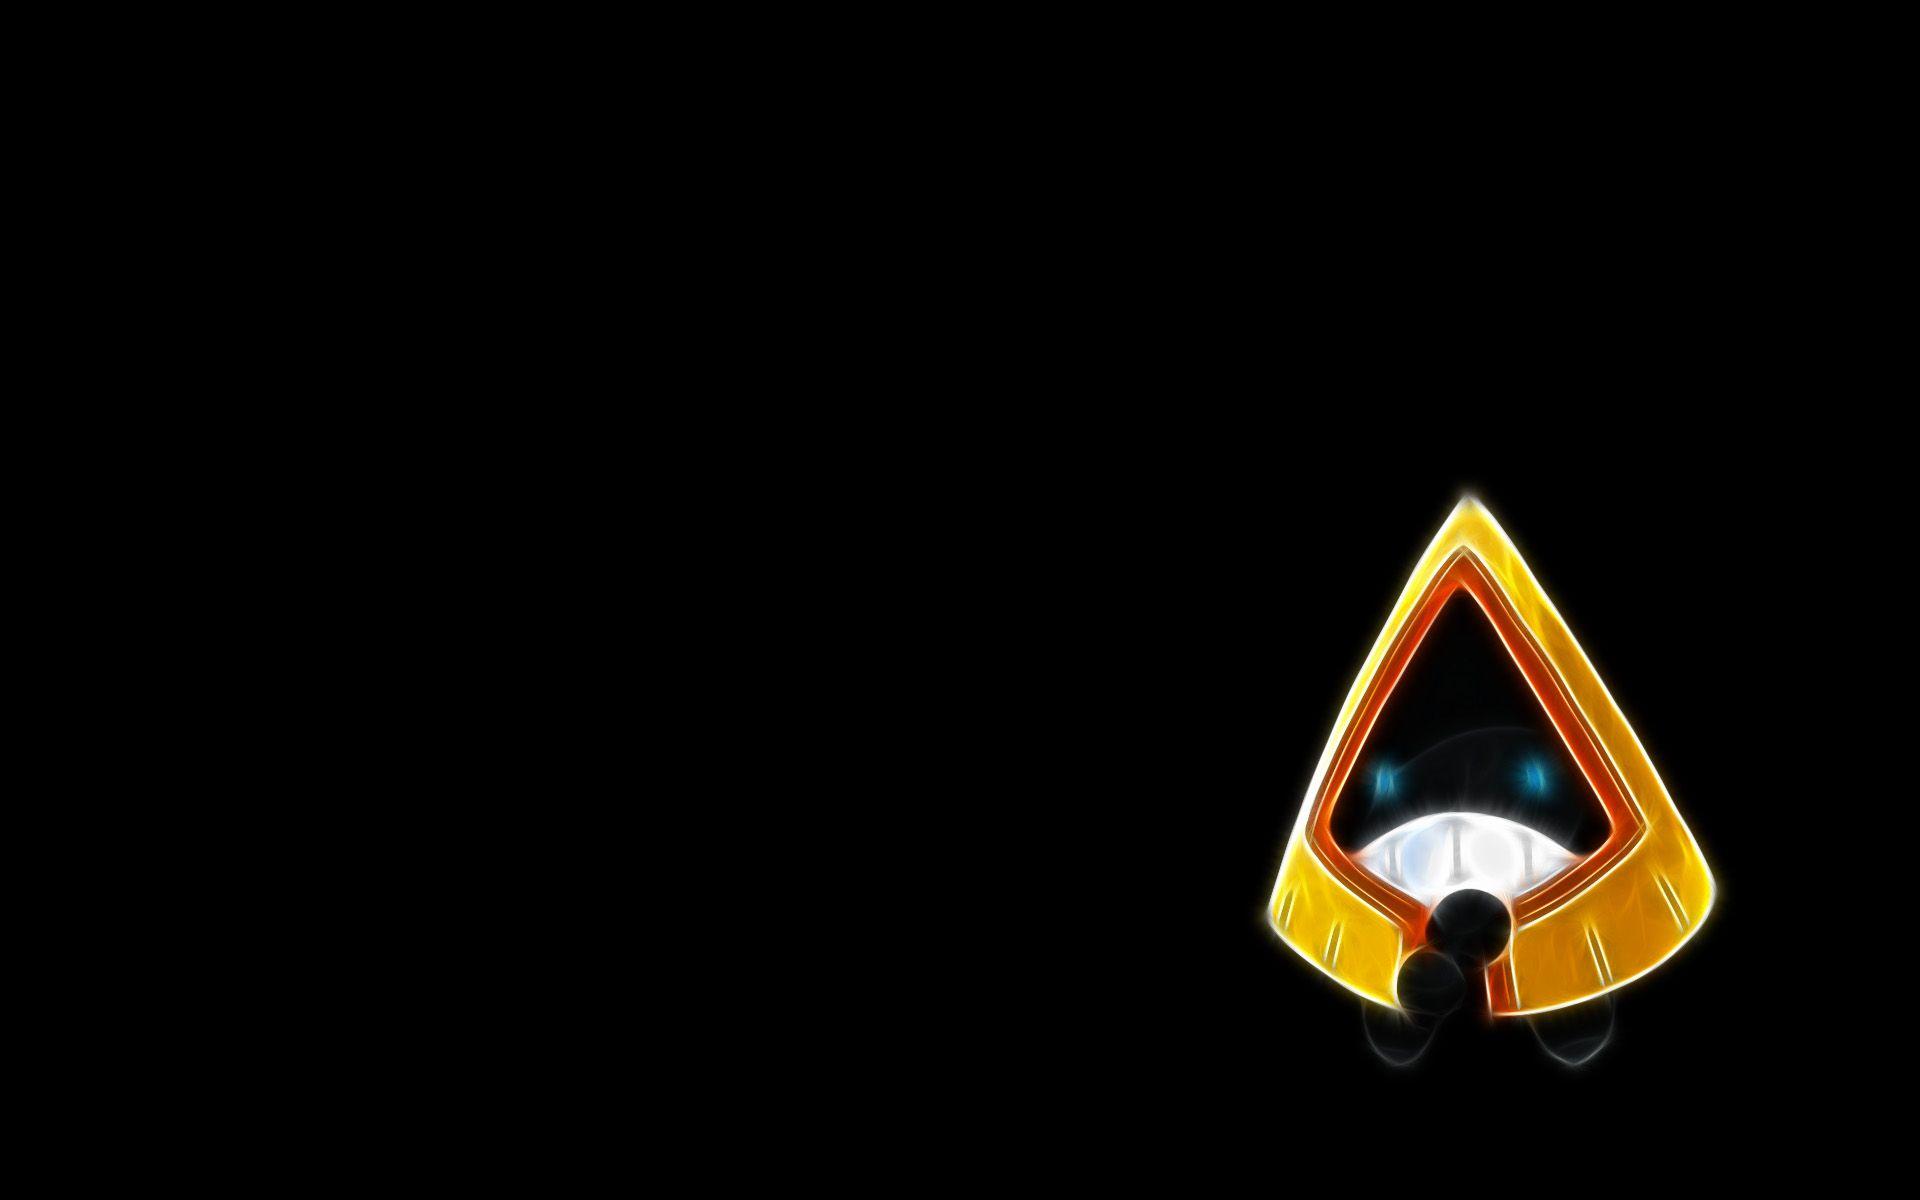 Snorunt (Pokémon) HD Wallpaper and Background Image